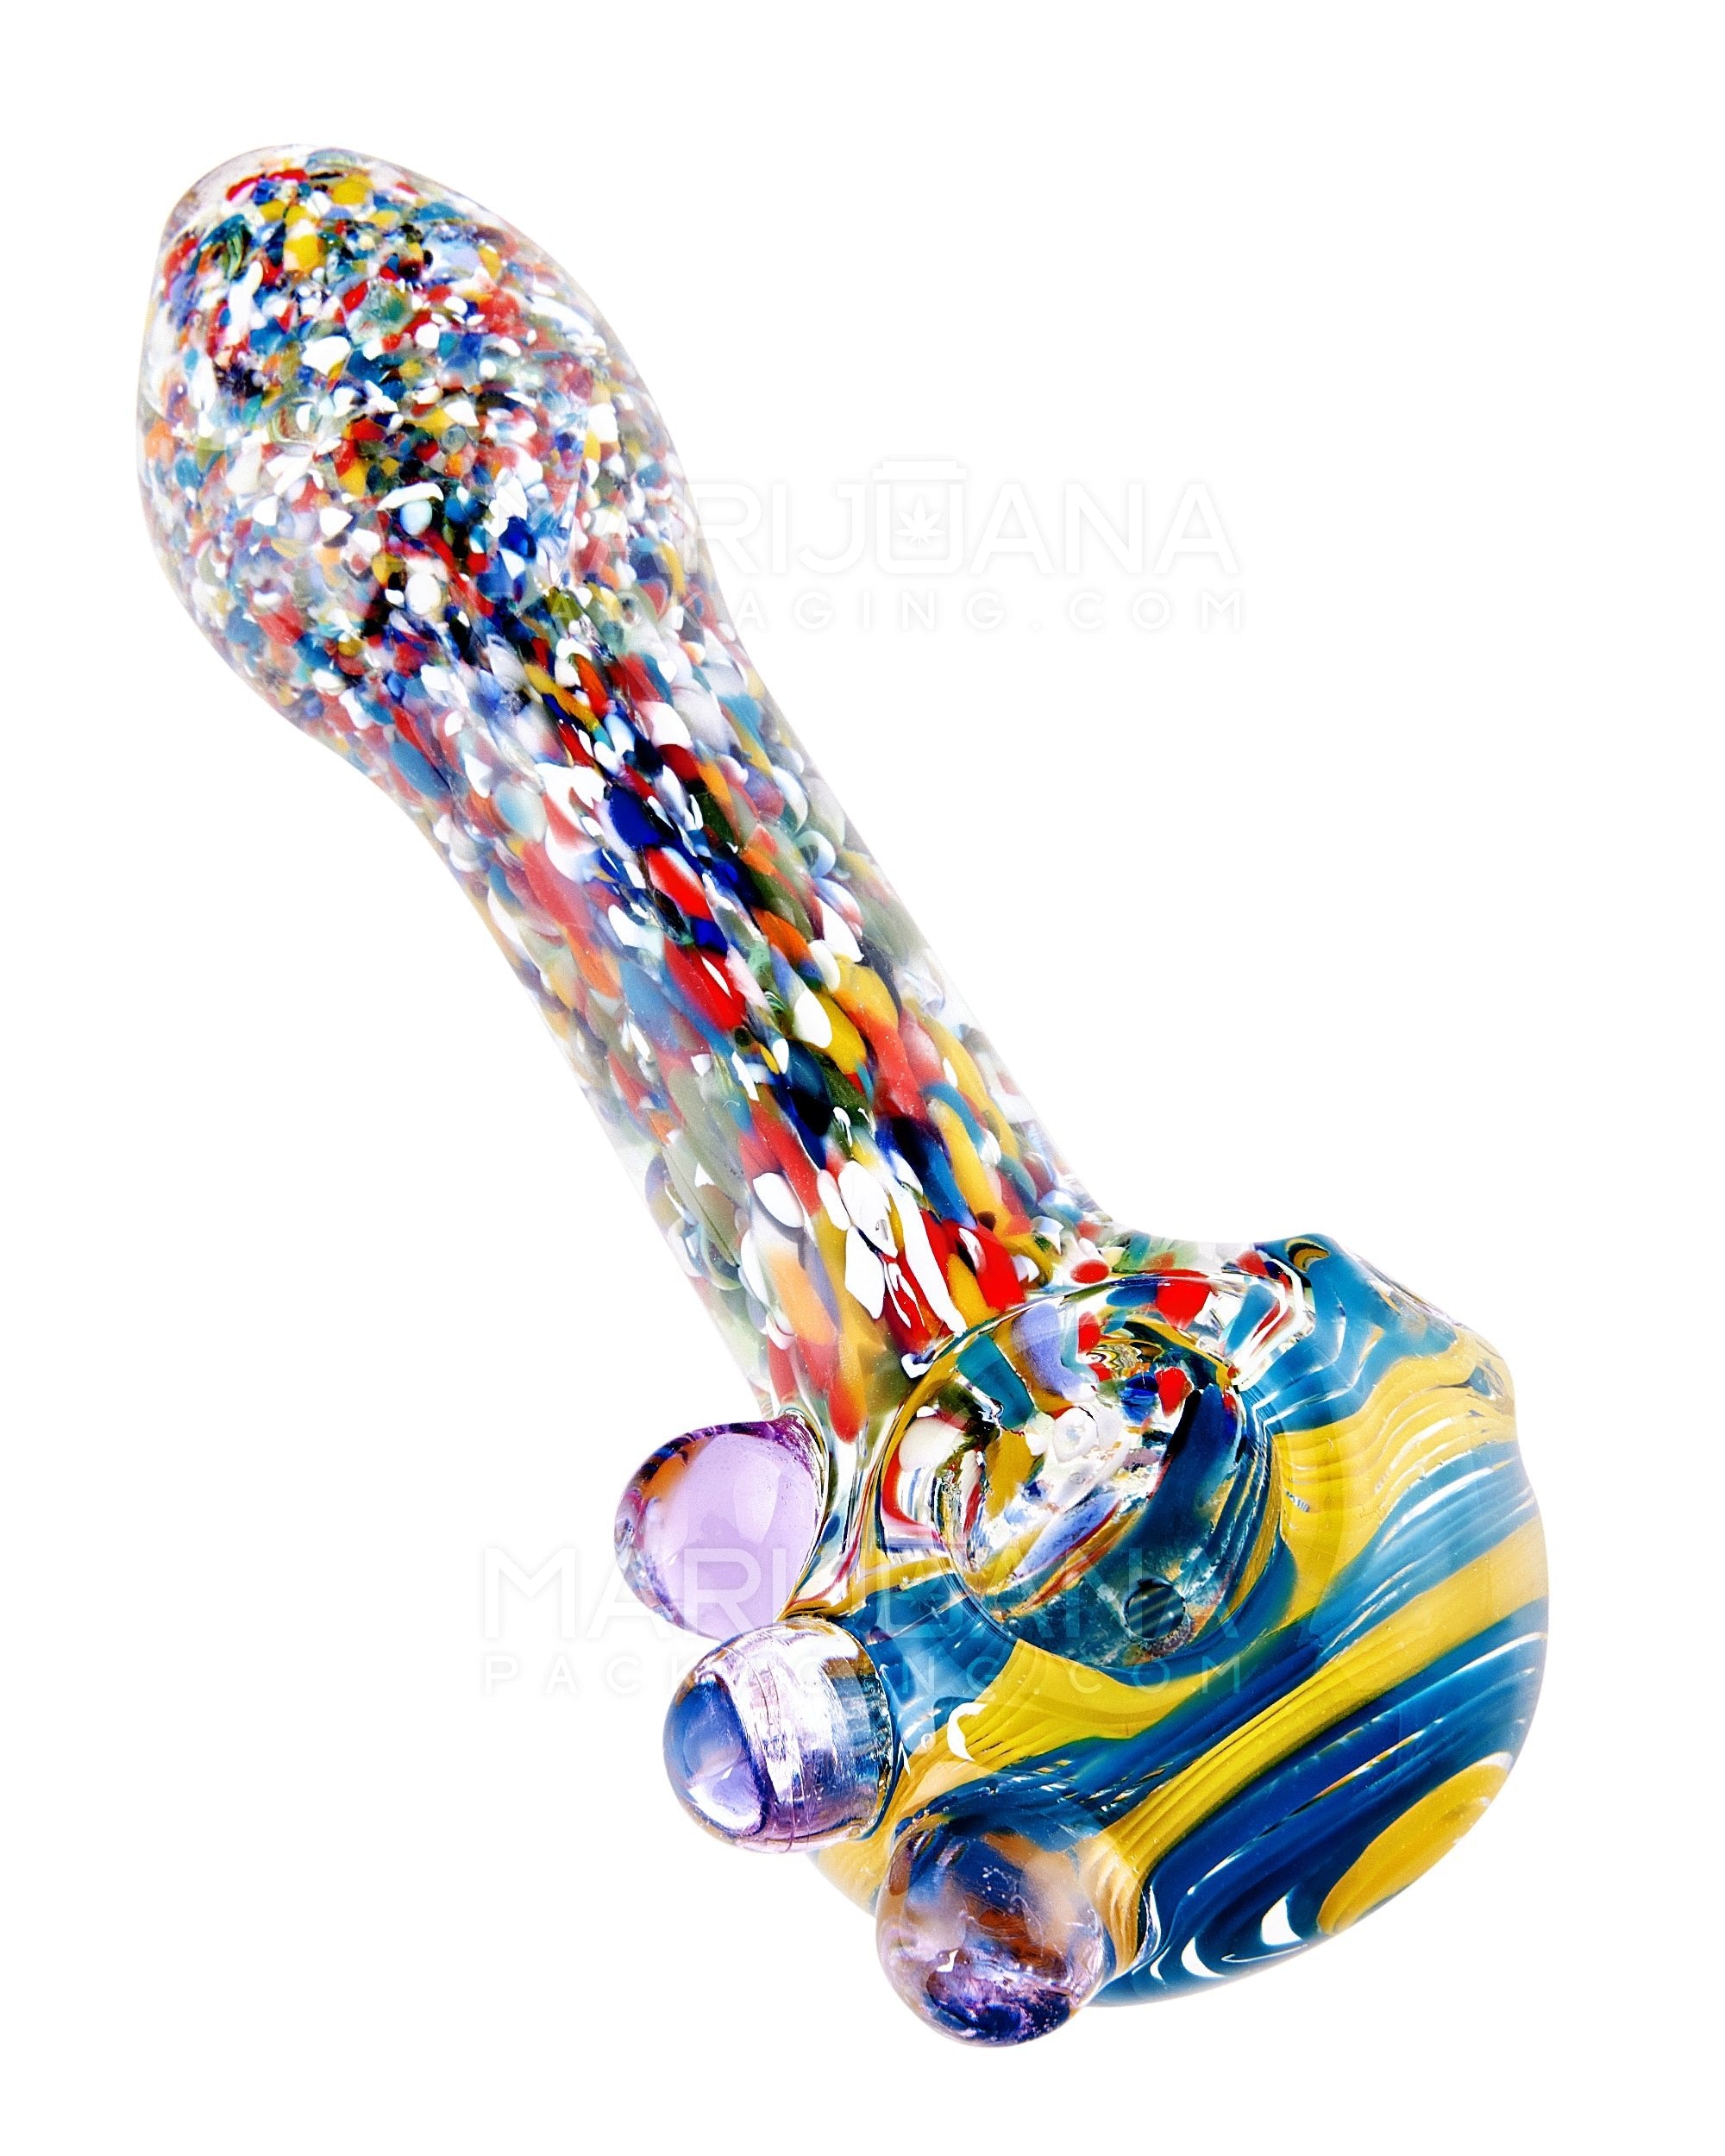 Confetti Frit & Swirl Spoon Hand Pipe w/ Triple Knockers | 4.5in Long - Glass - Assorted - 6